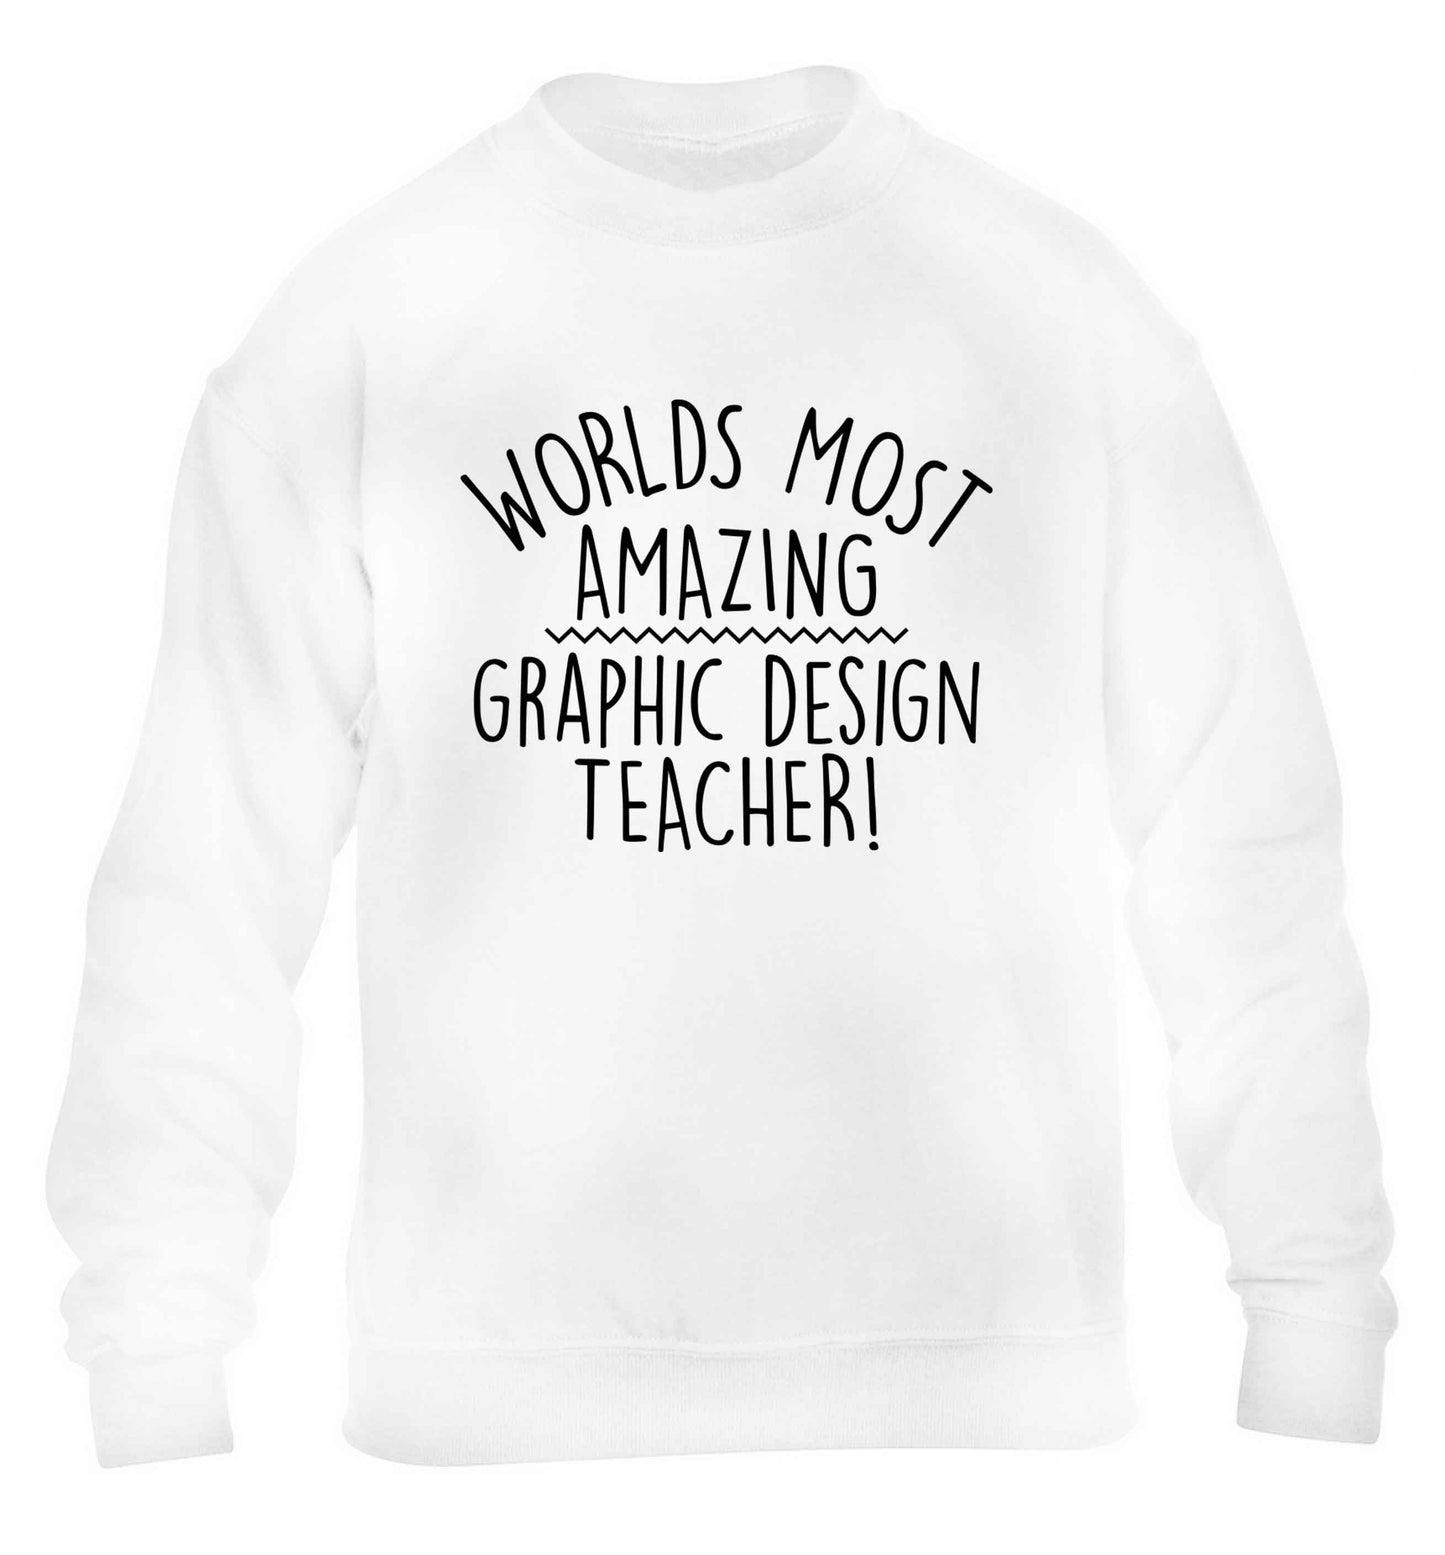 Worlds most amazing graphic design teacher children's white sweater 12-13 Years